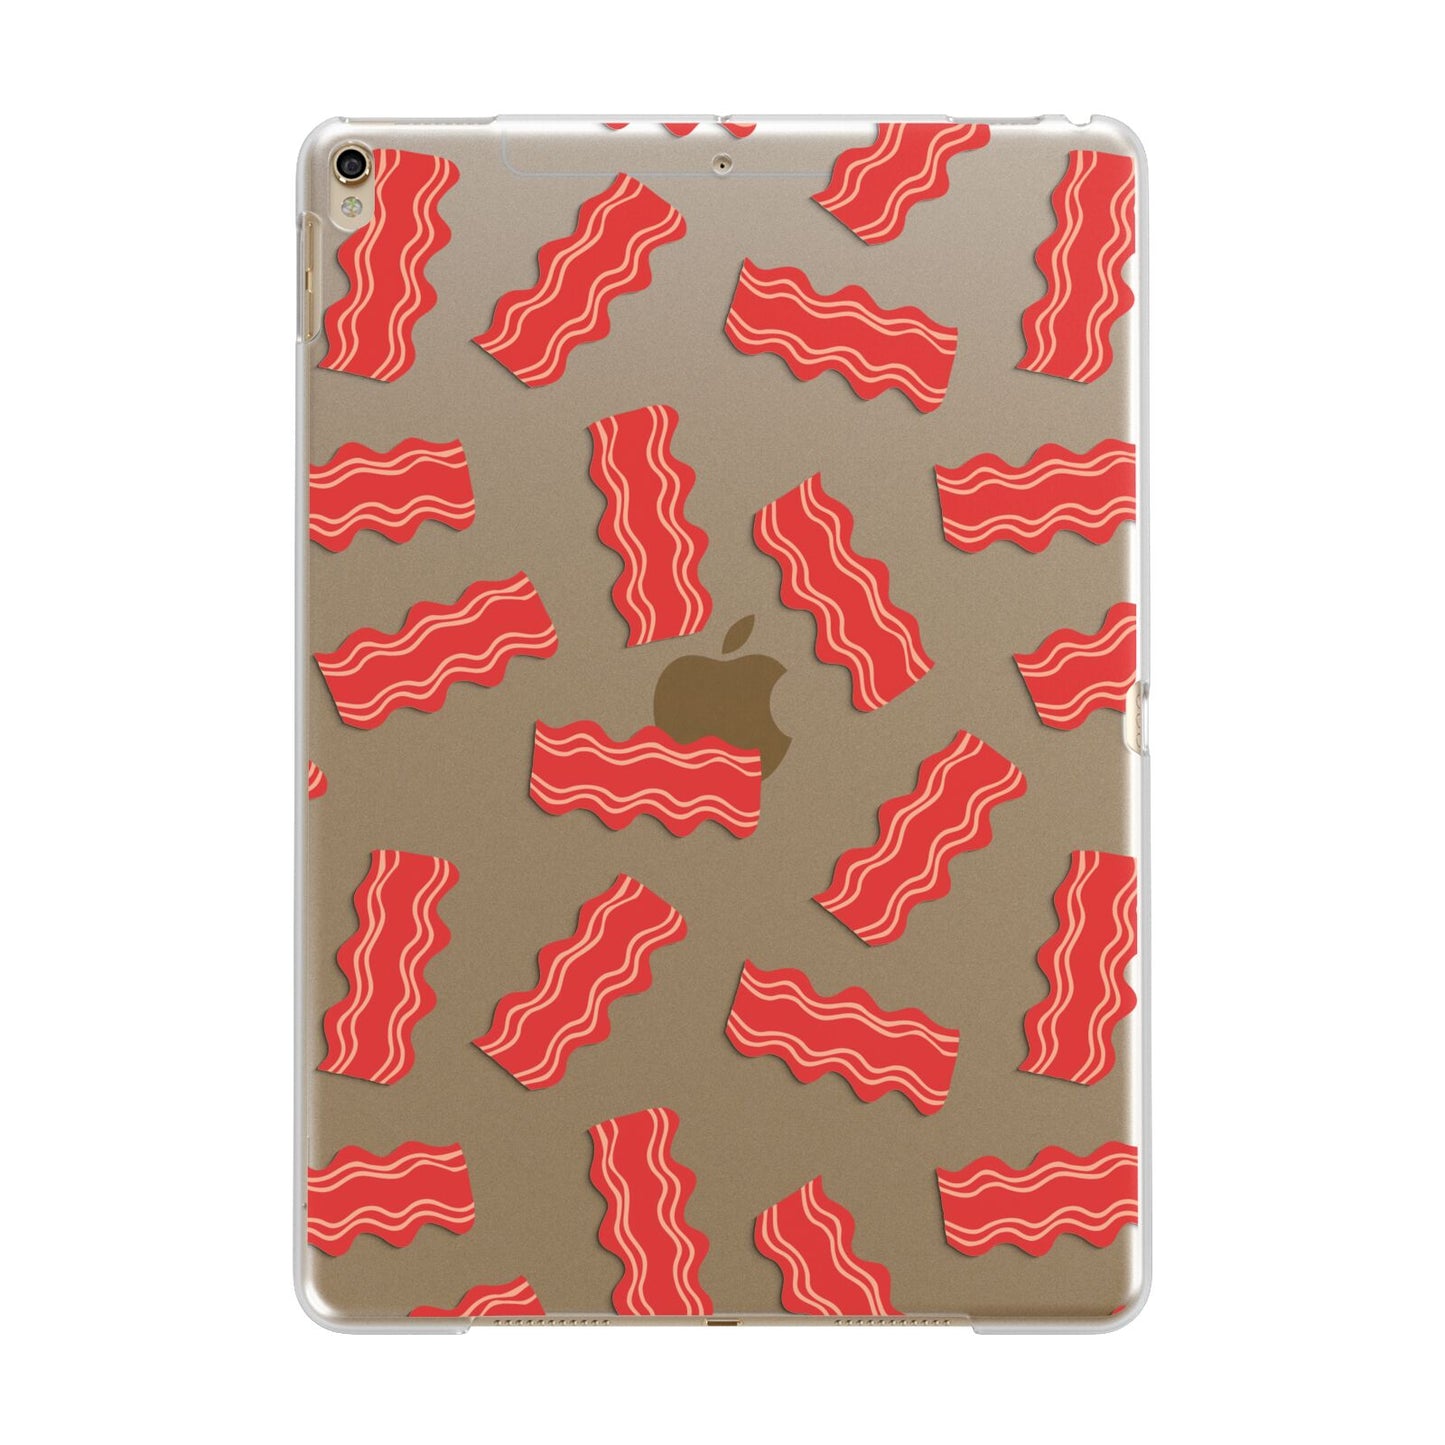 Bacon Apple iPad Gold Case